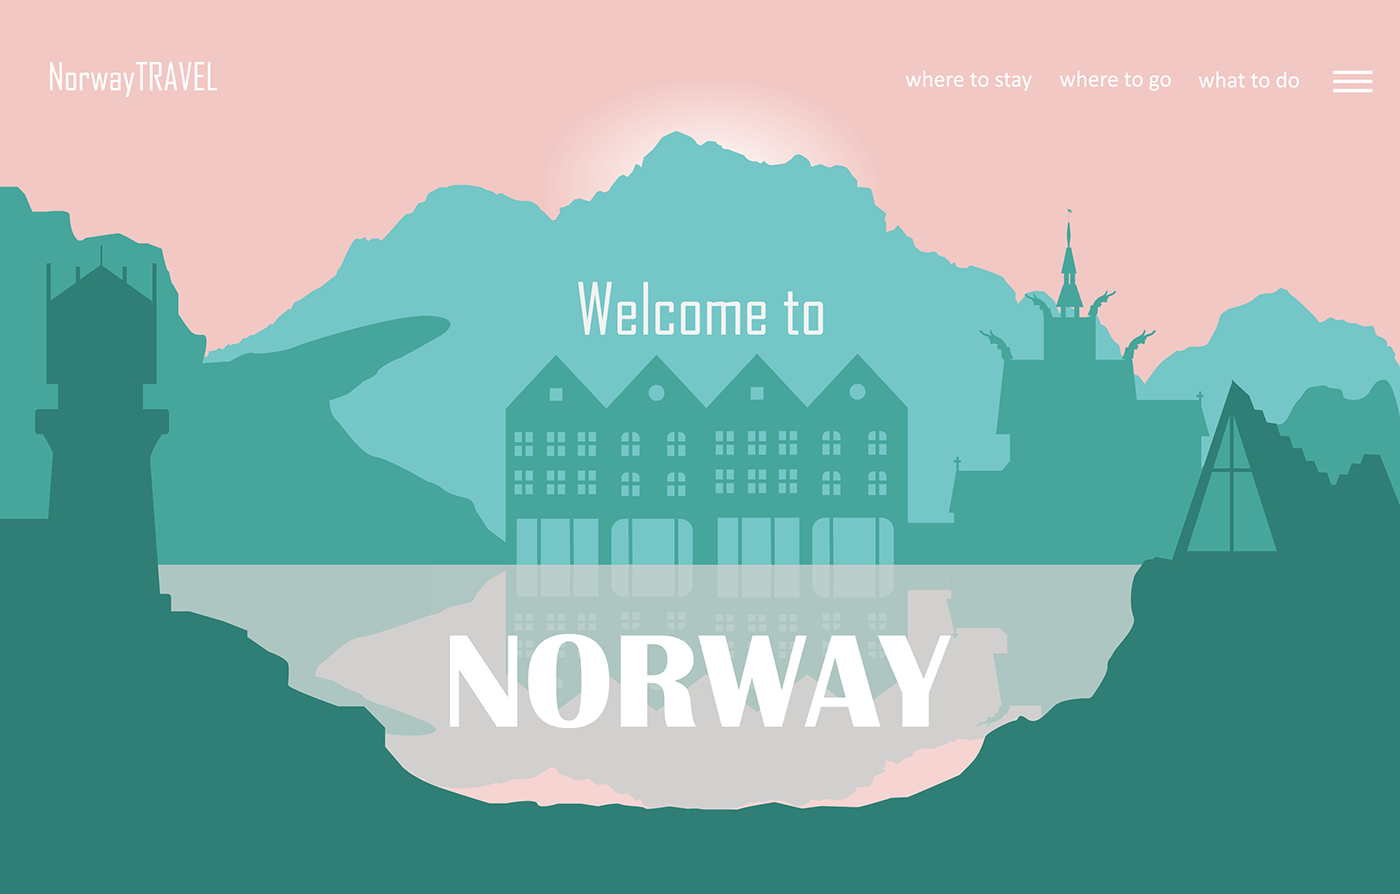 Website Silhouette norway landing page Travel сайт Норвегия туризм путешествия силуэт